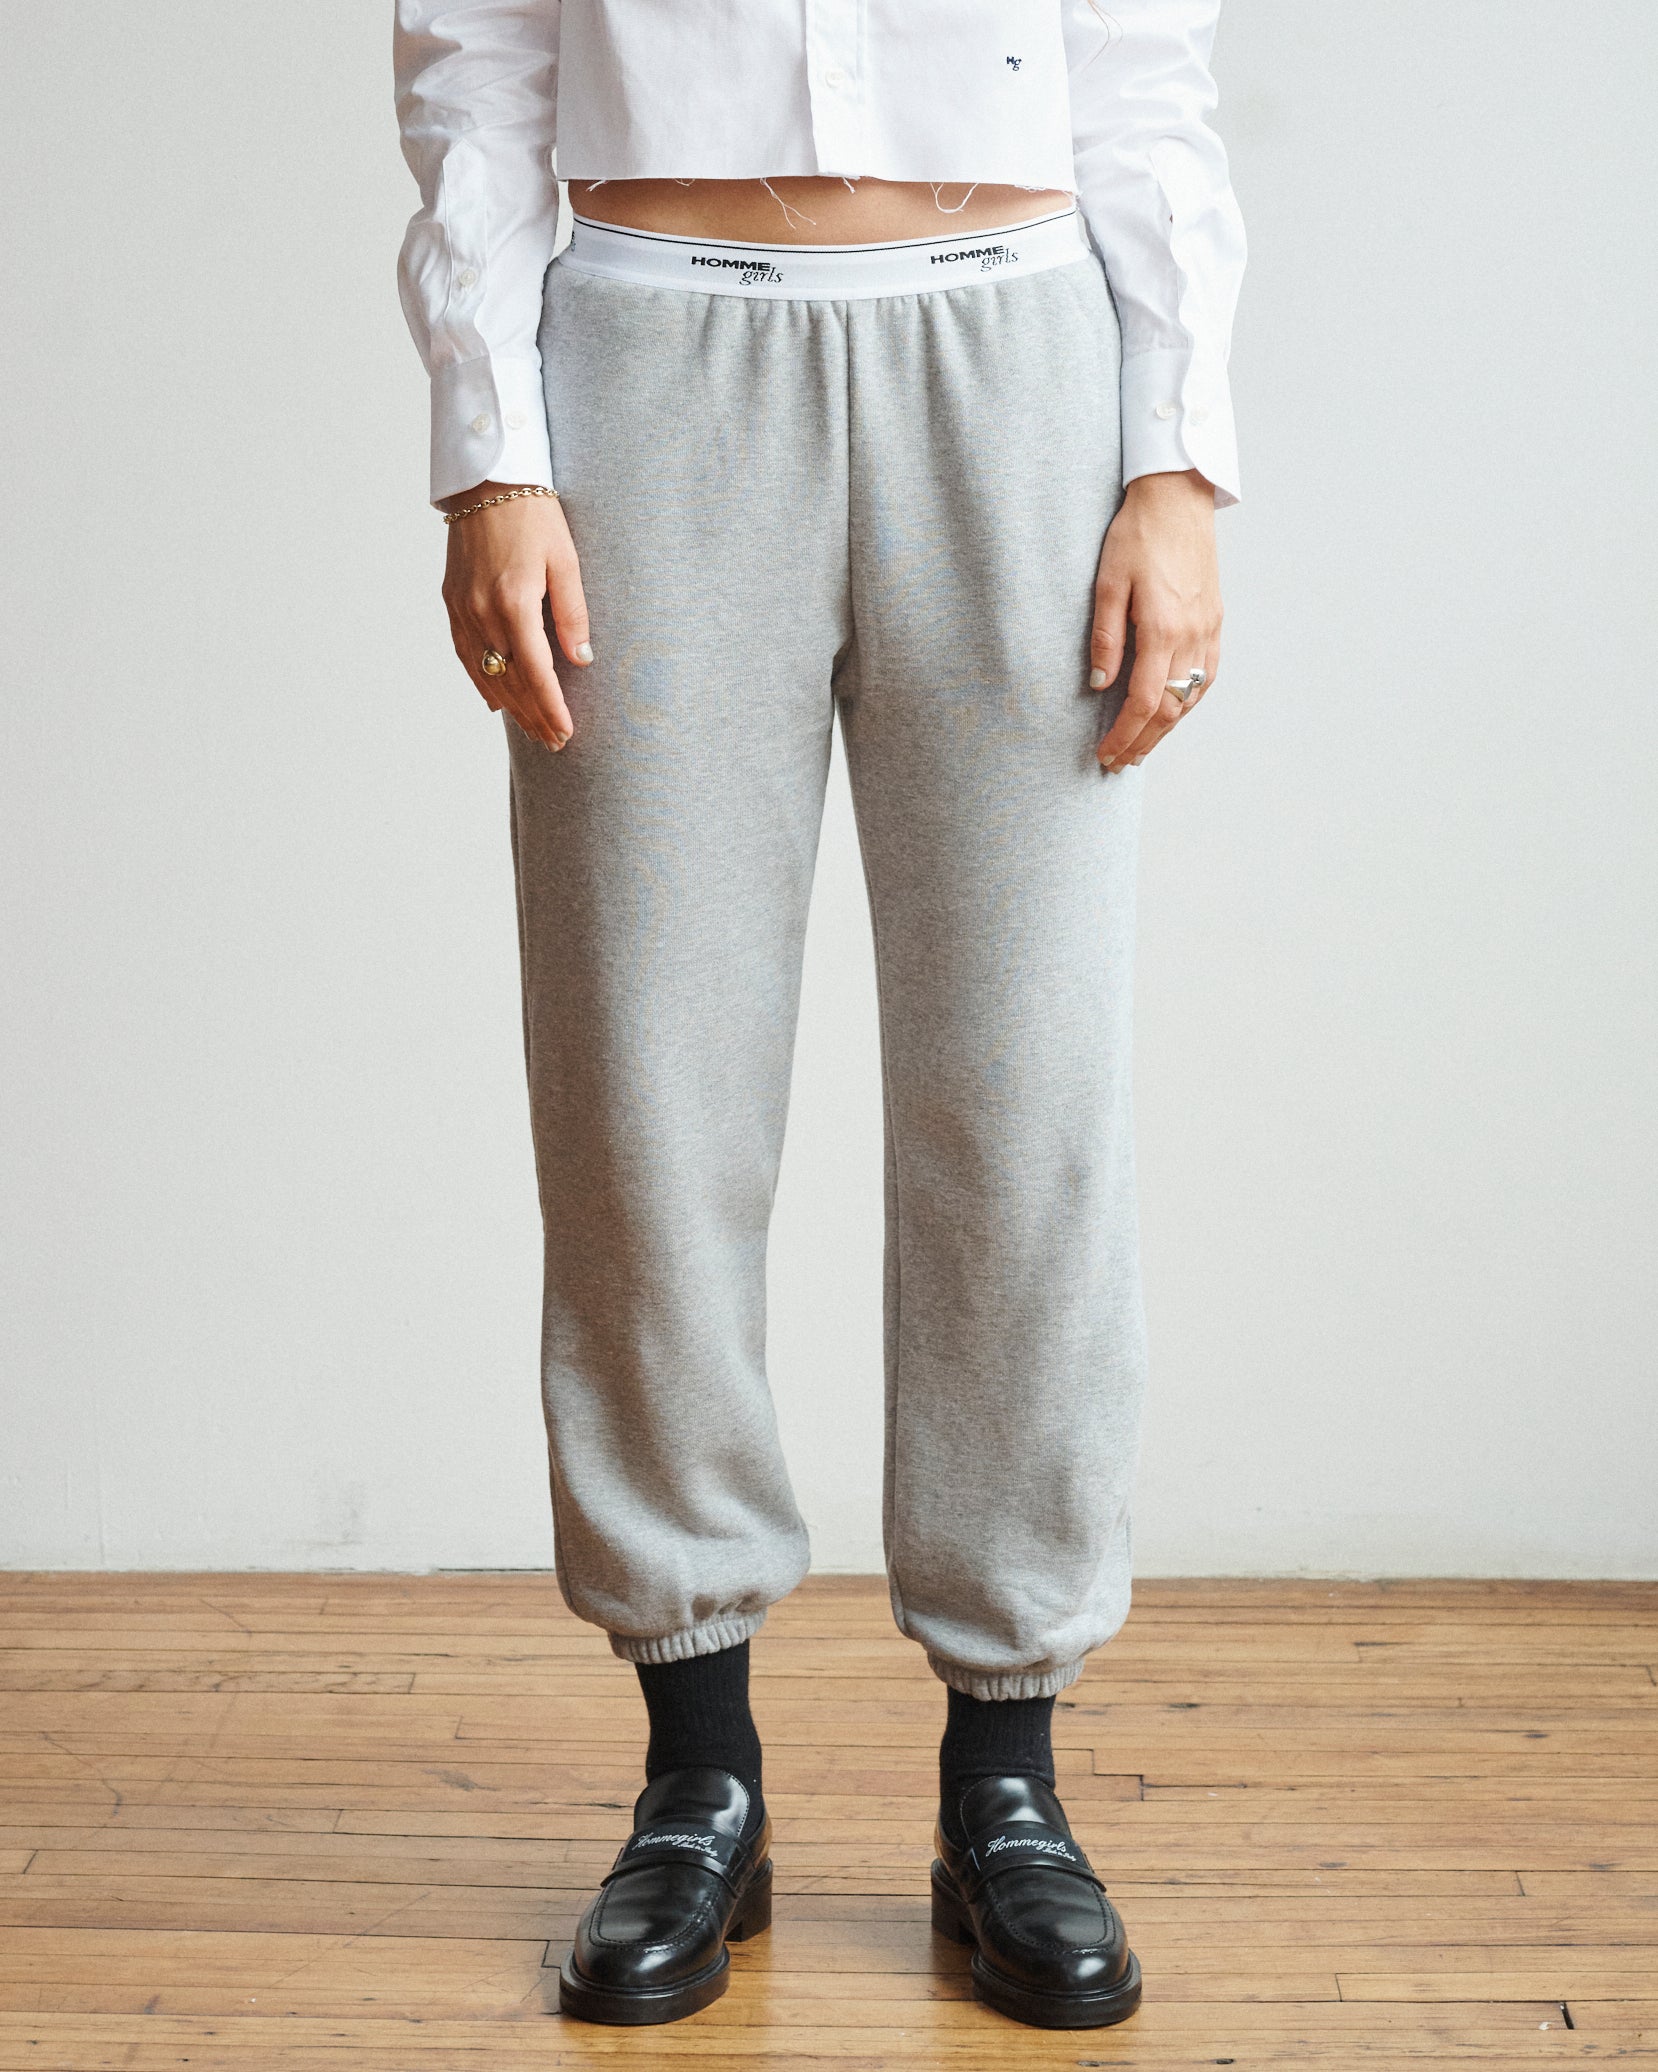 vintage grey sweatpants for kids, fashionable, durable